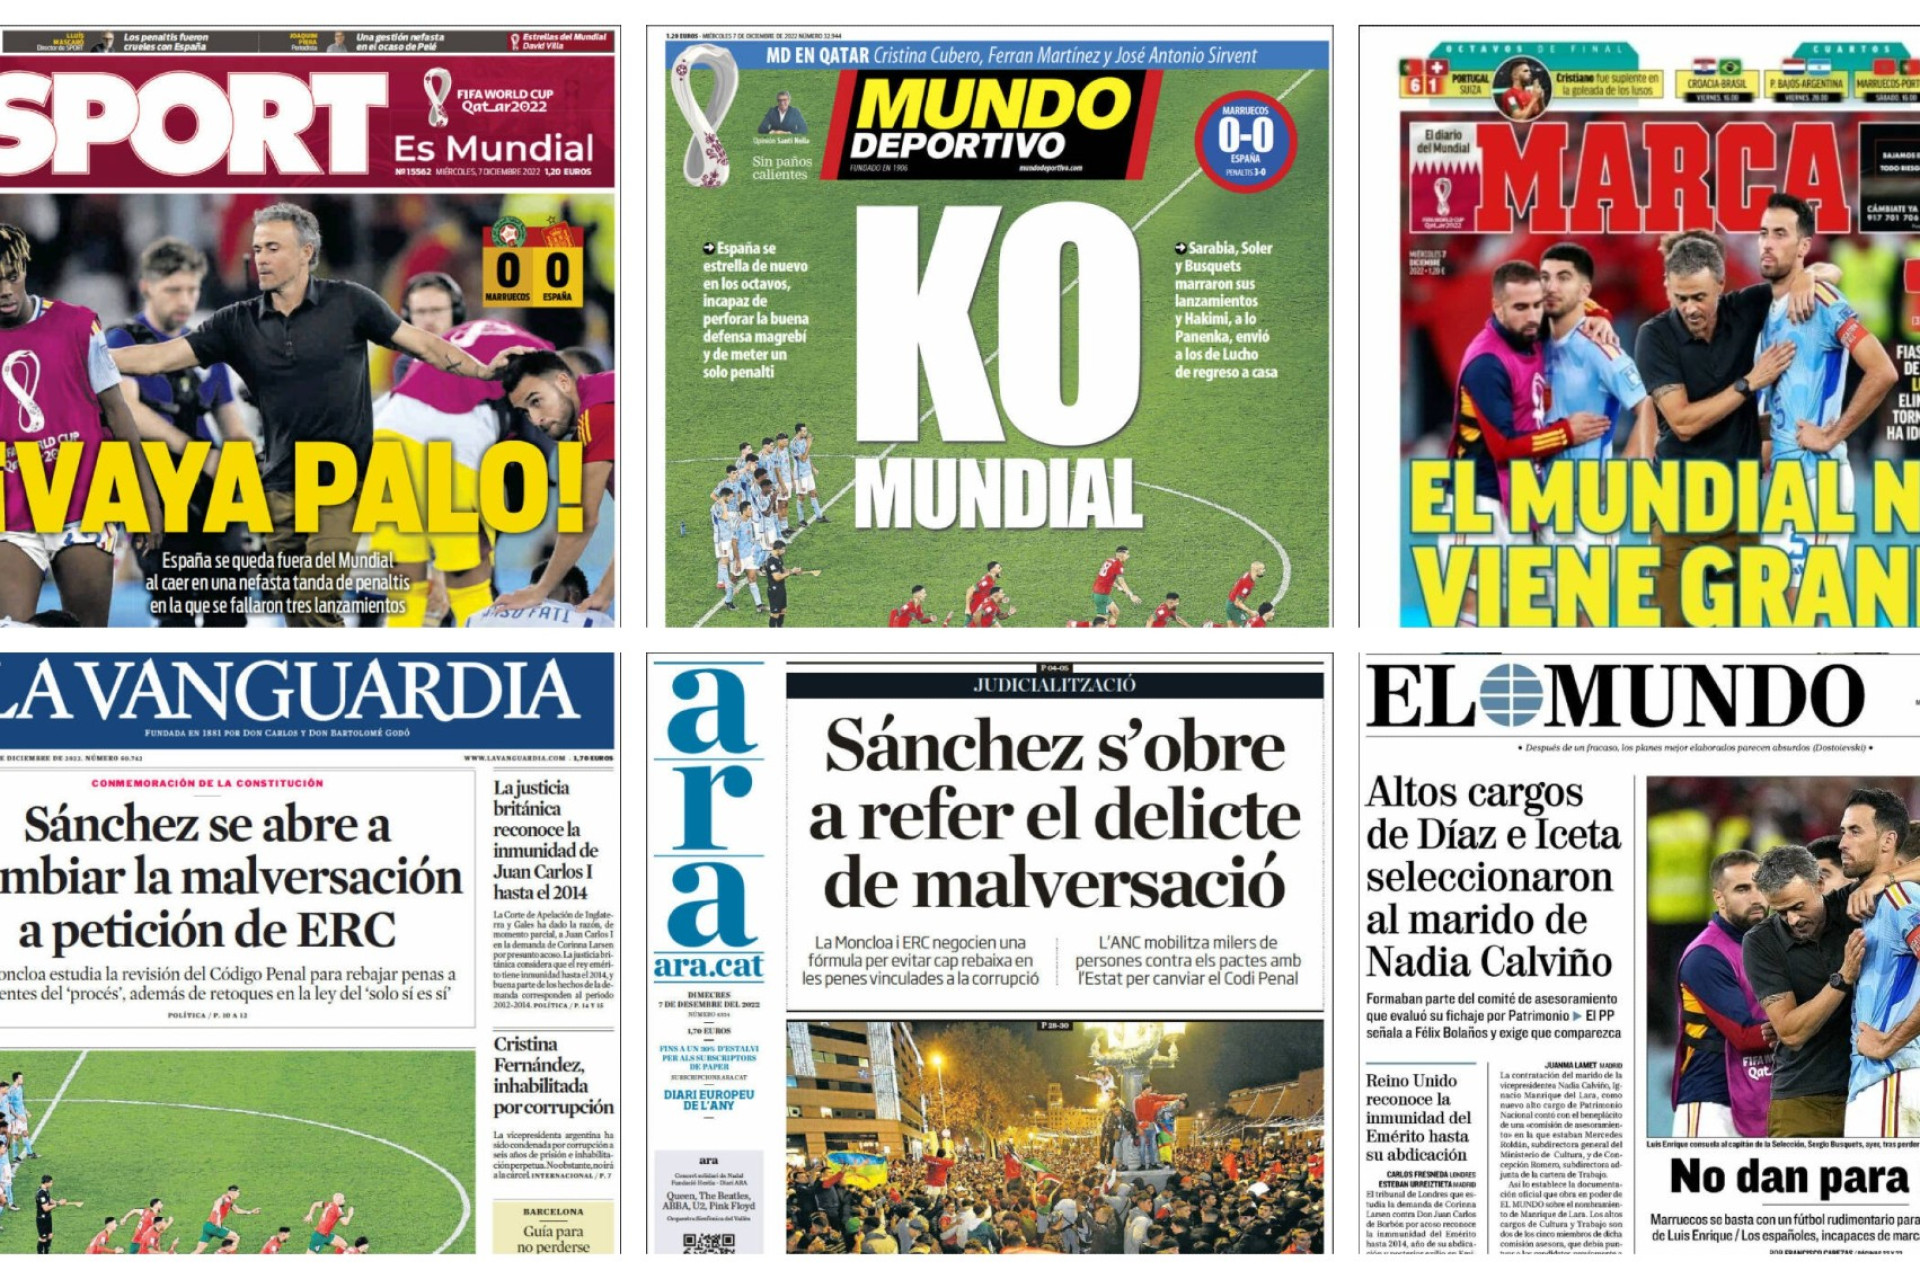 A penaltis y a la calle: La prensa destaca la derrota de la Roja al Mundial  